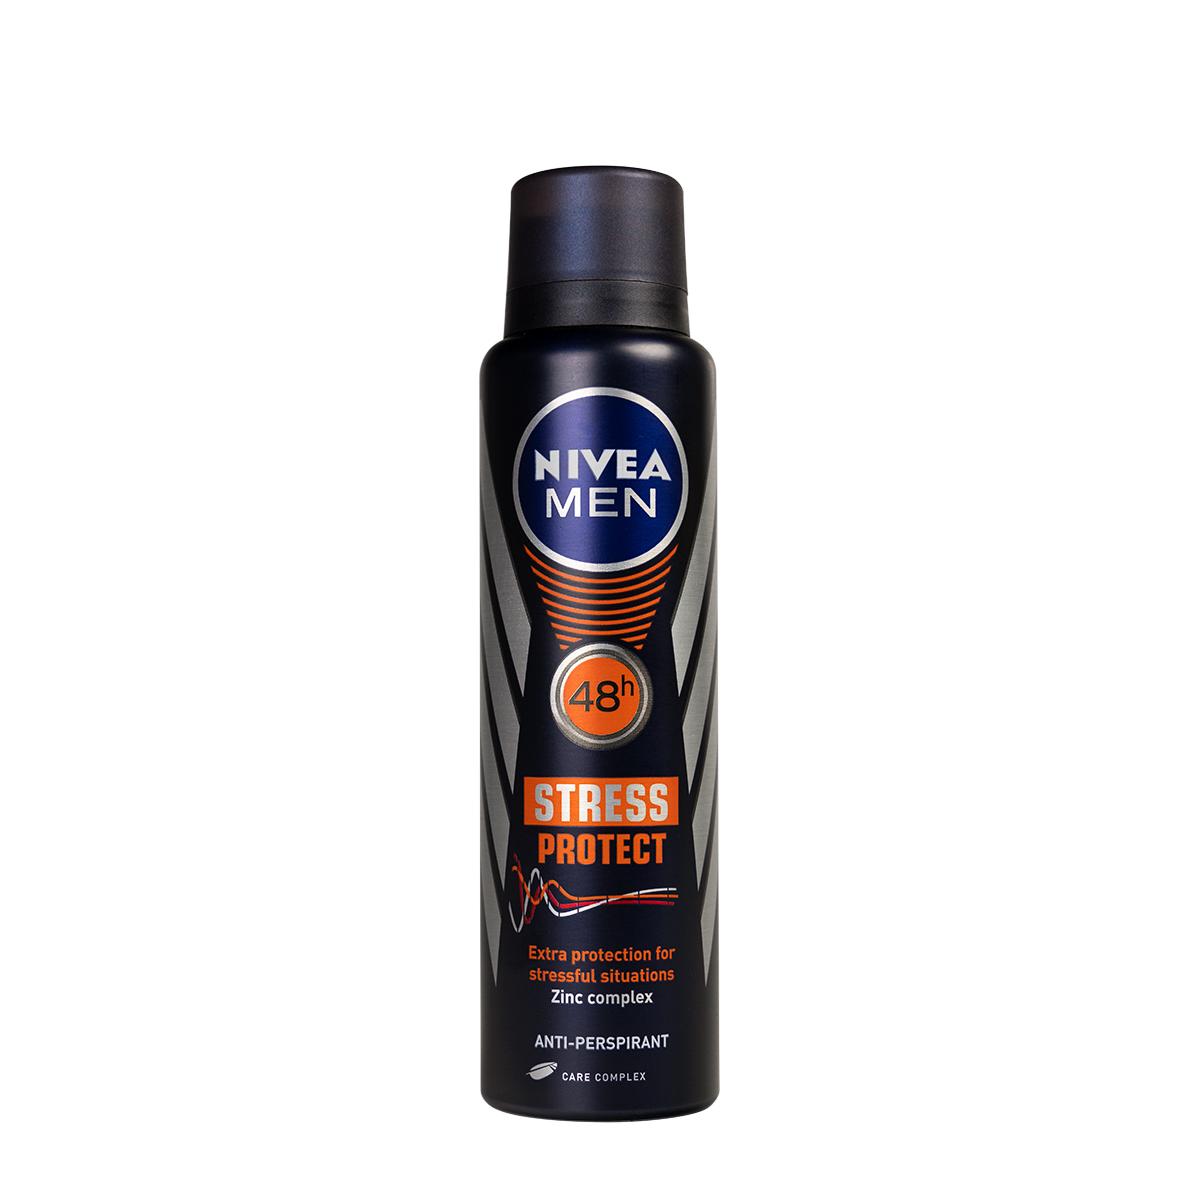 Nivea Men's Spray Stress Protect Anti-Perspirant Deodorant (150 ml) –